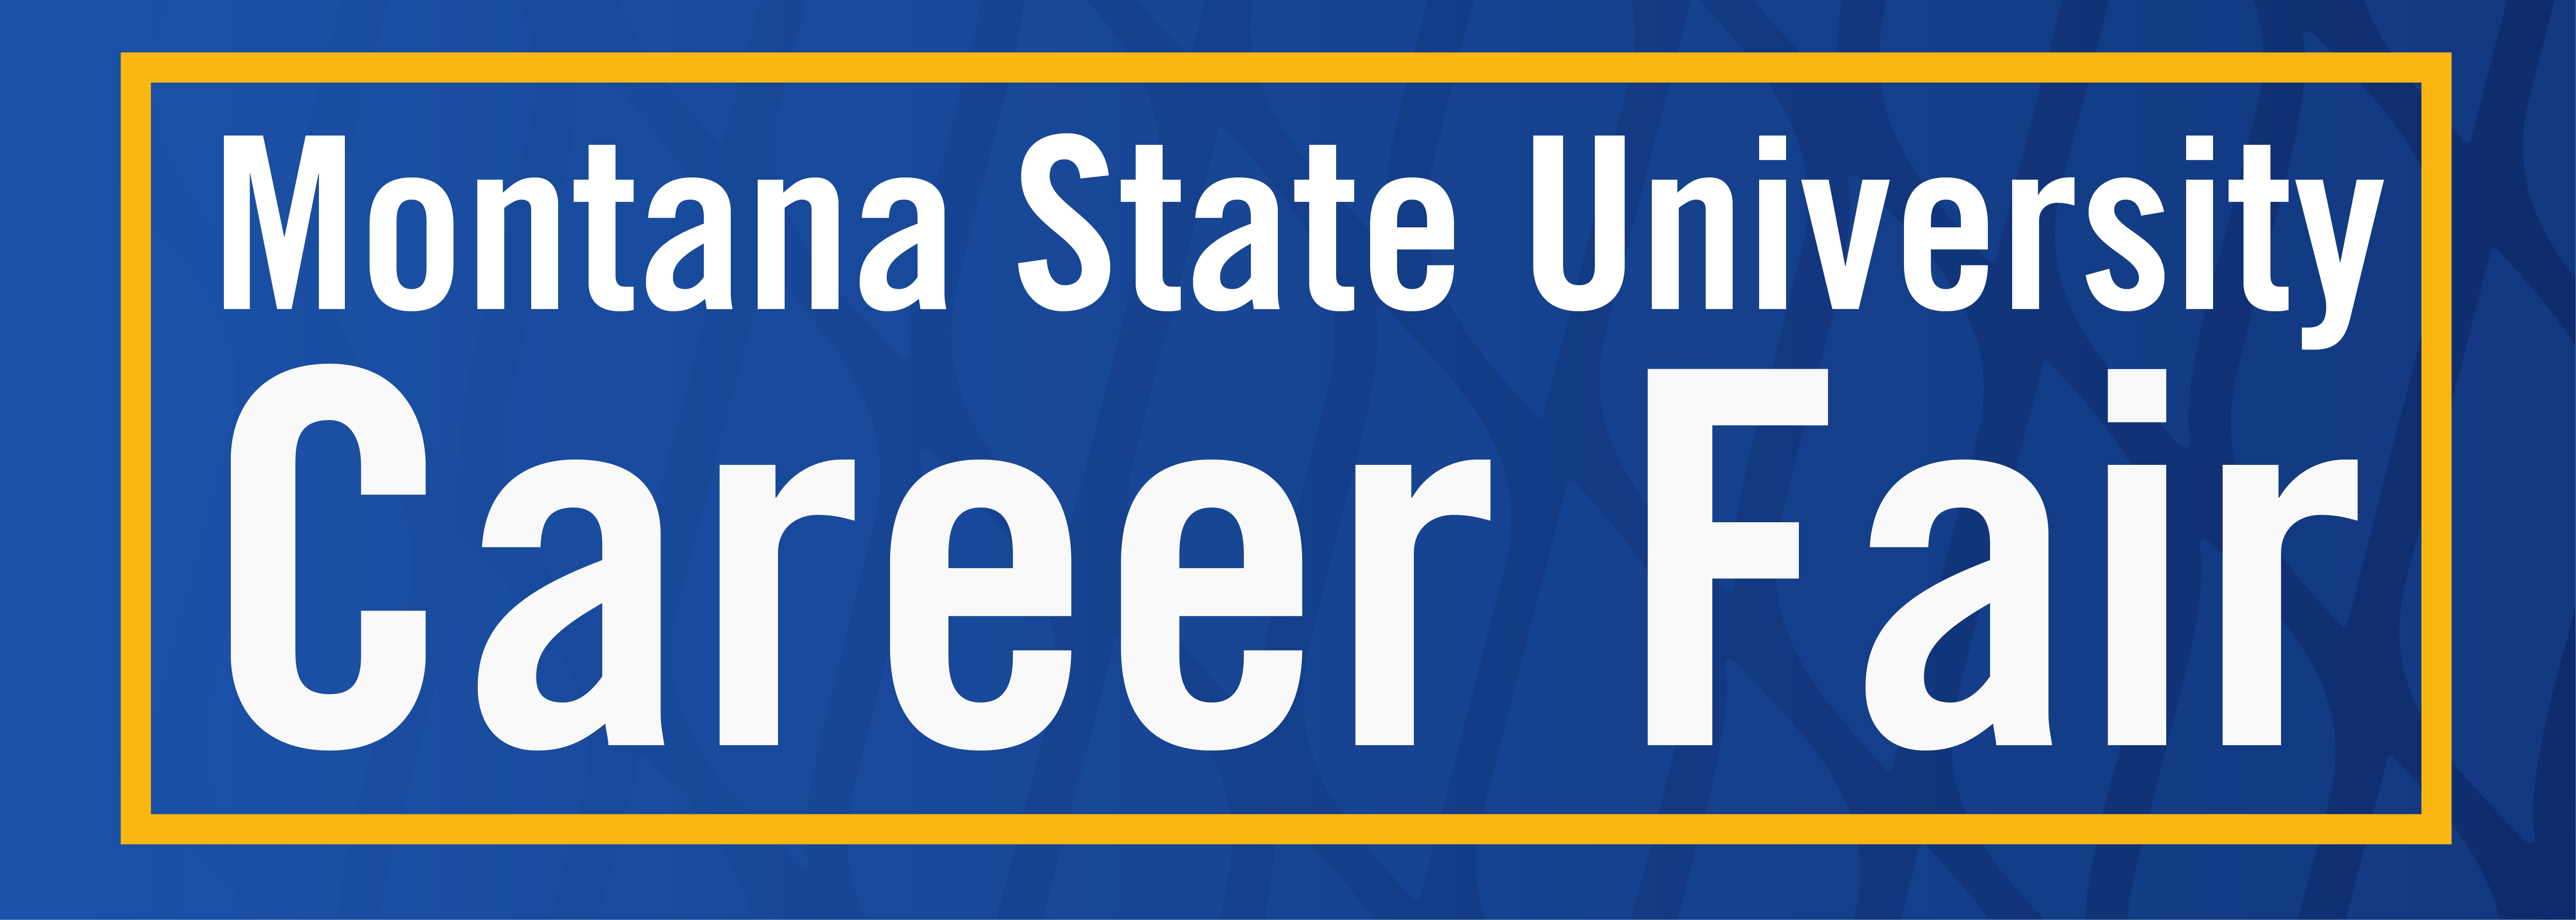 Montana State University Career Fair